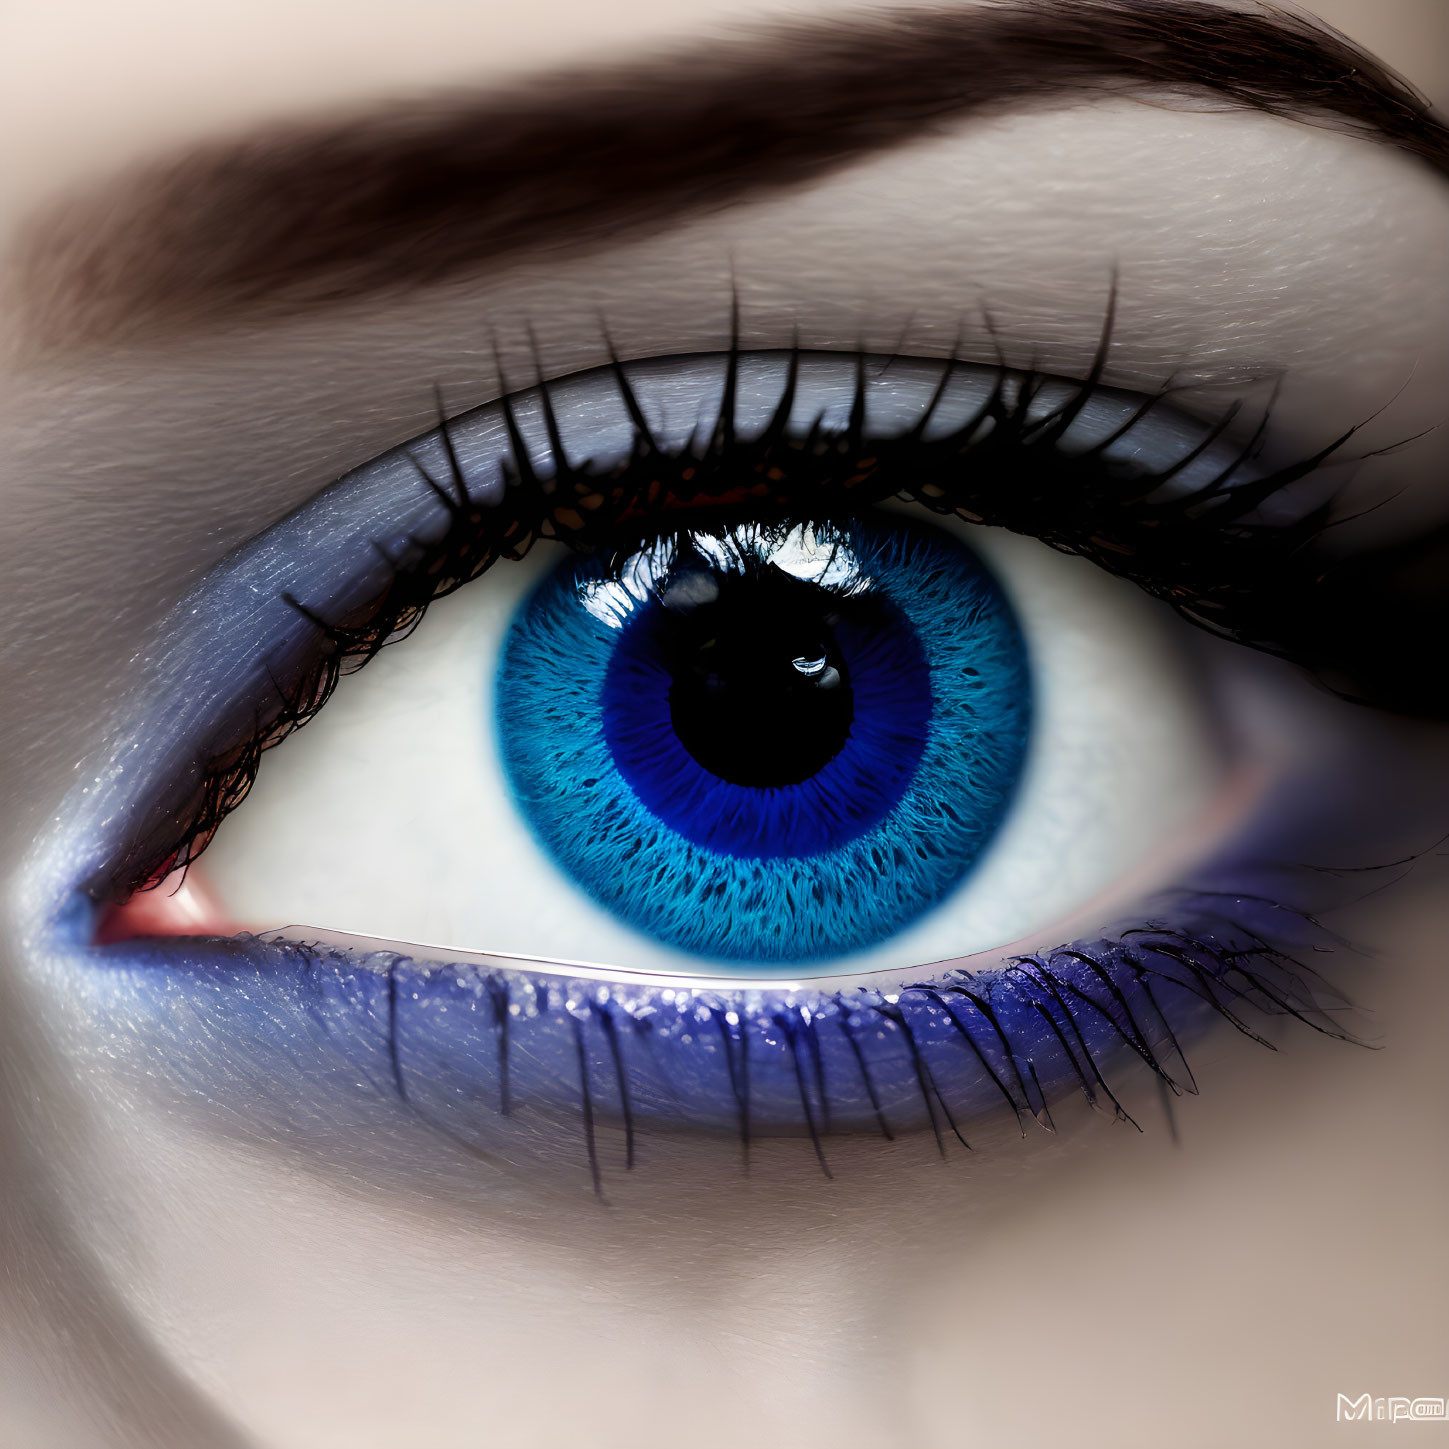 Detailed Blue Eye Close-Up with Mascara and Eyeliner